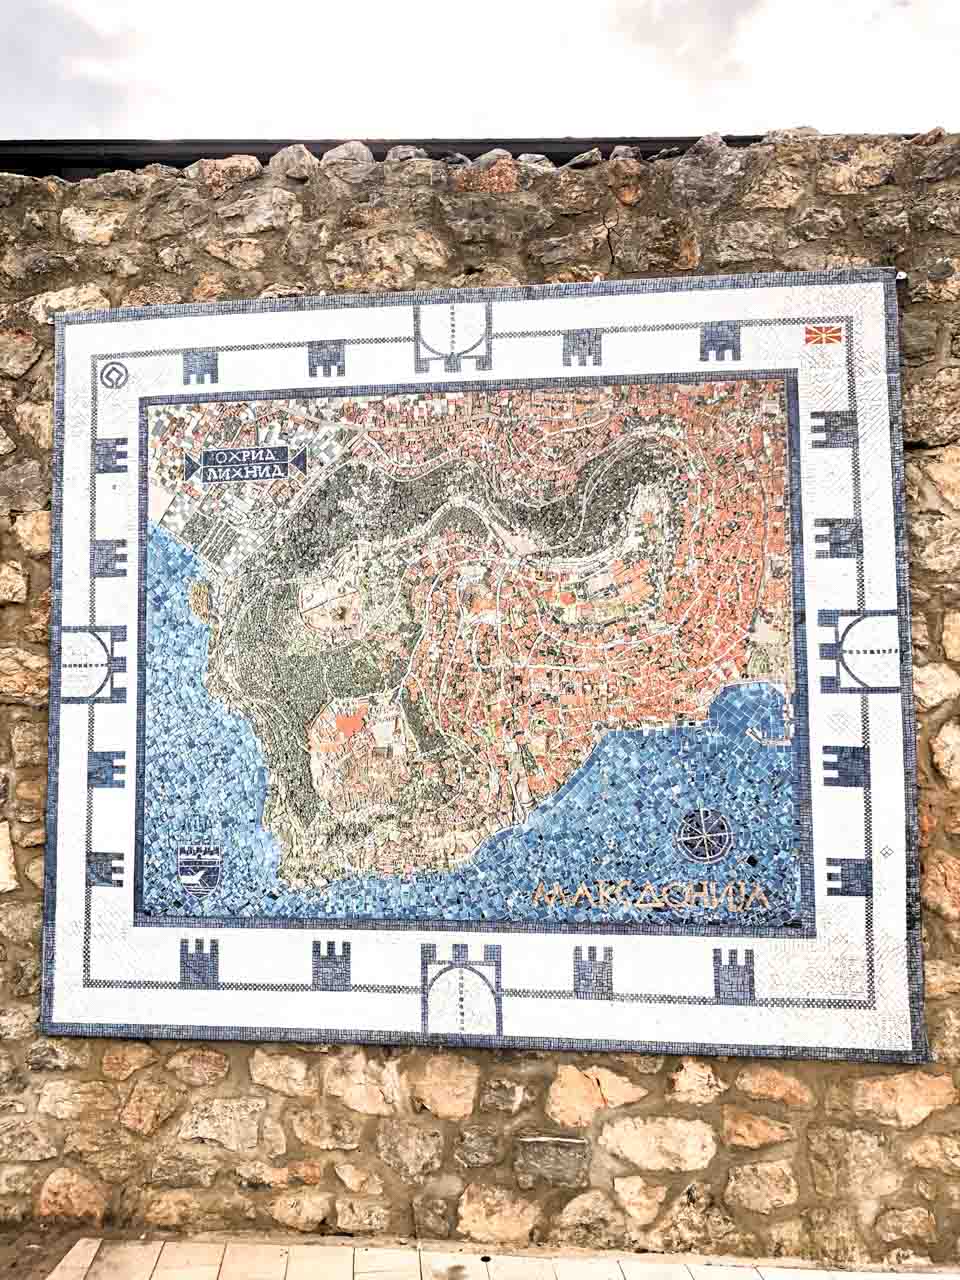 Mosaic showing a map of Ohrid, North Macedonia